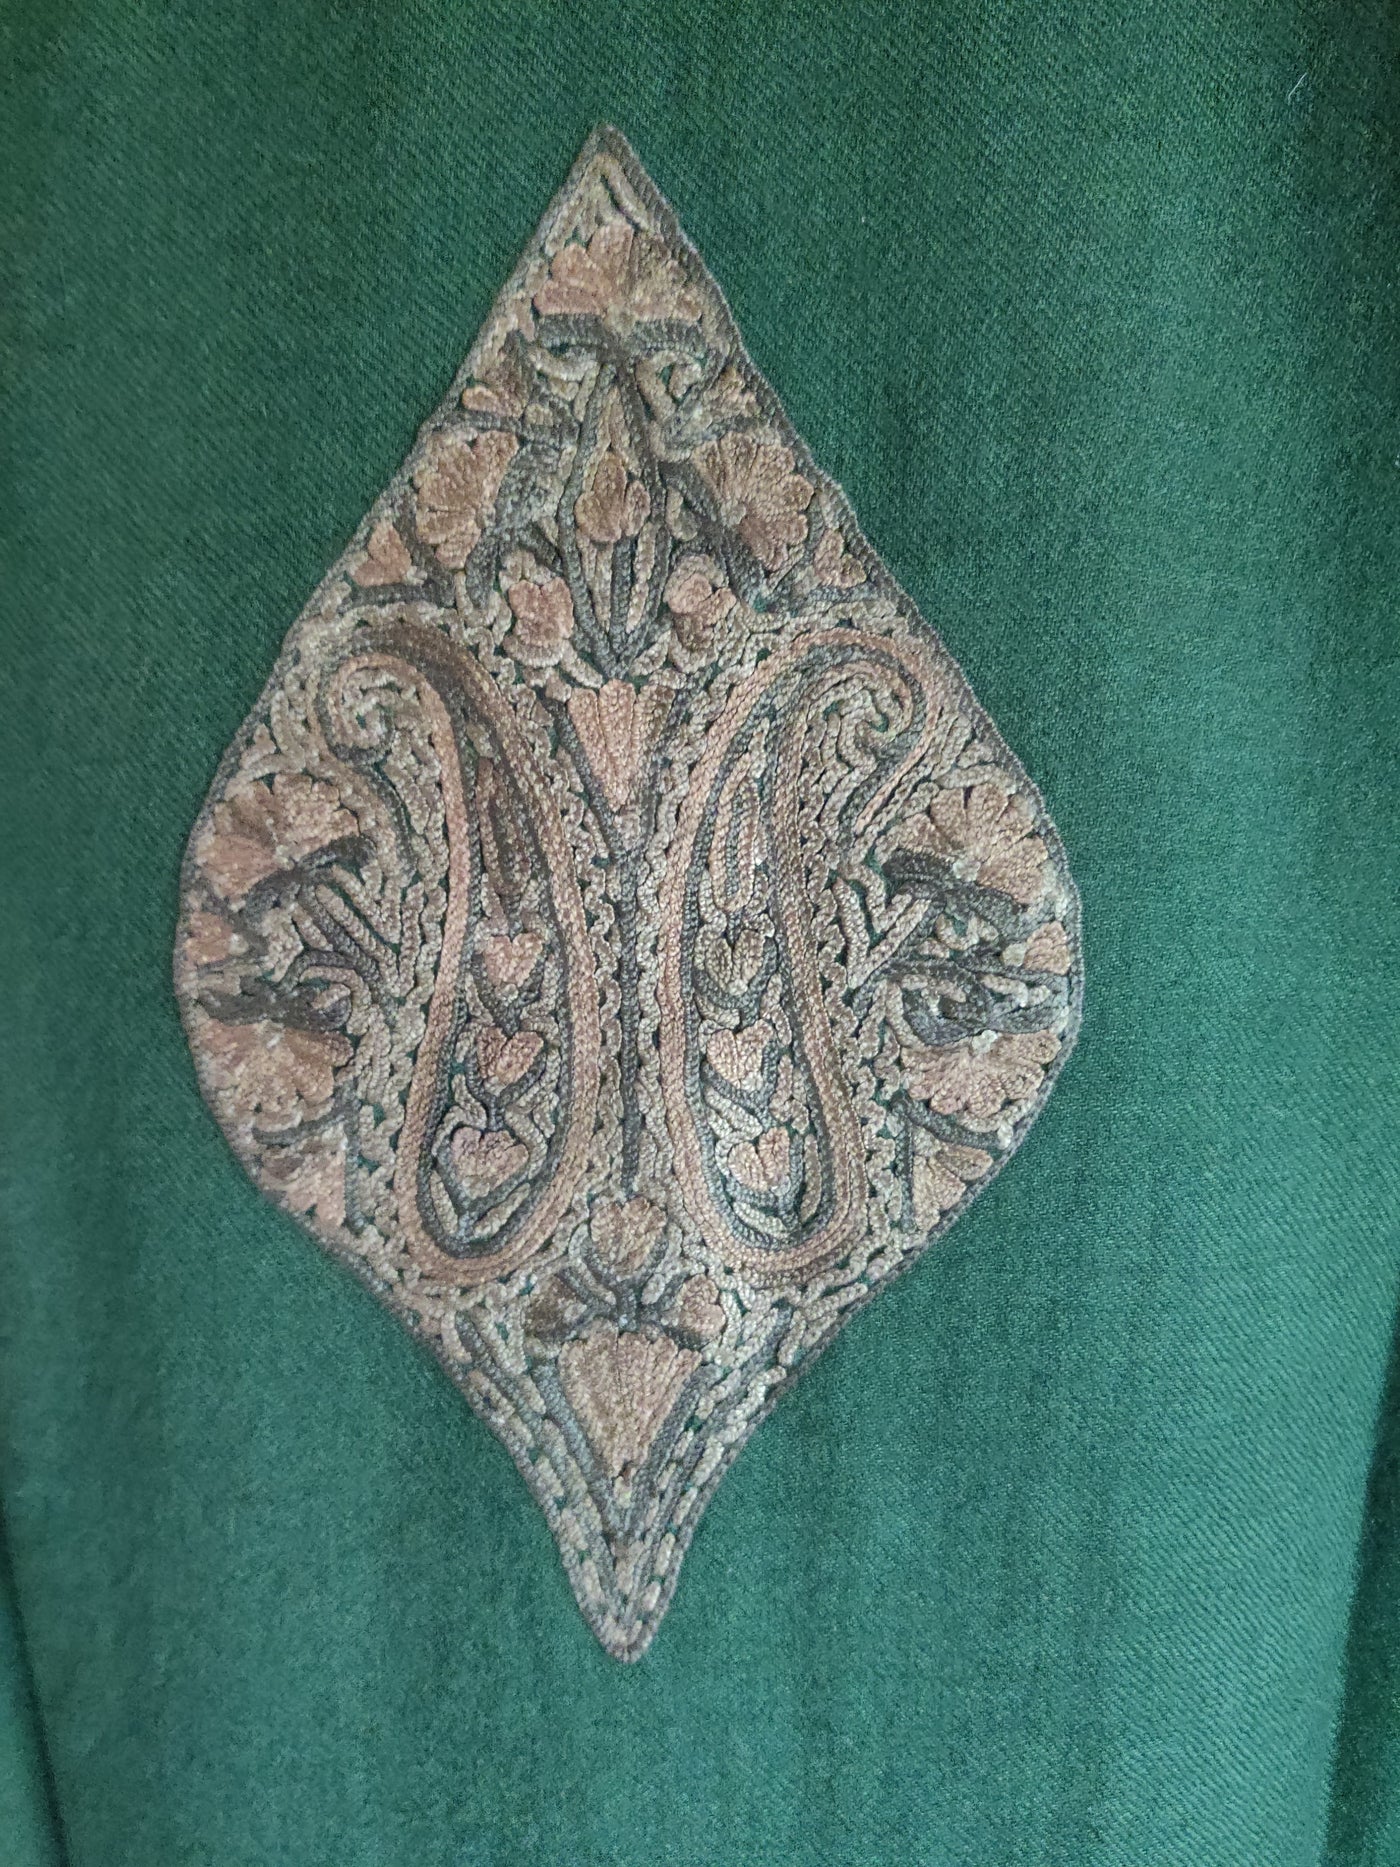 Hand Aari Kashmiri Jacket in Green - KashmKari